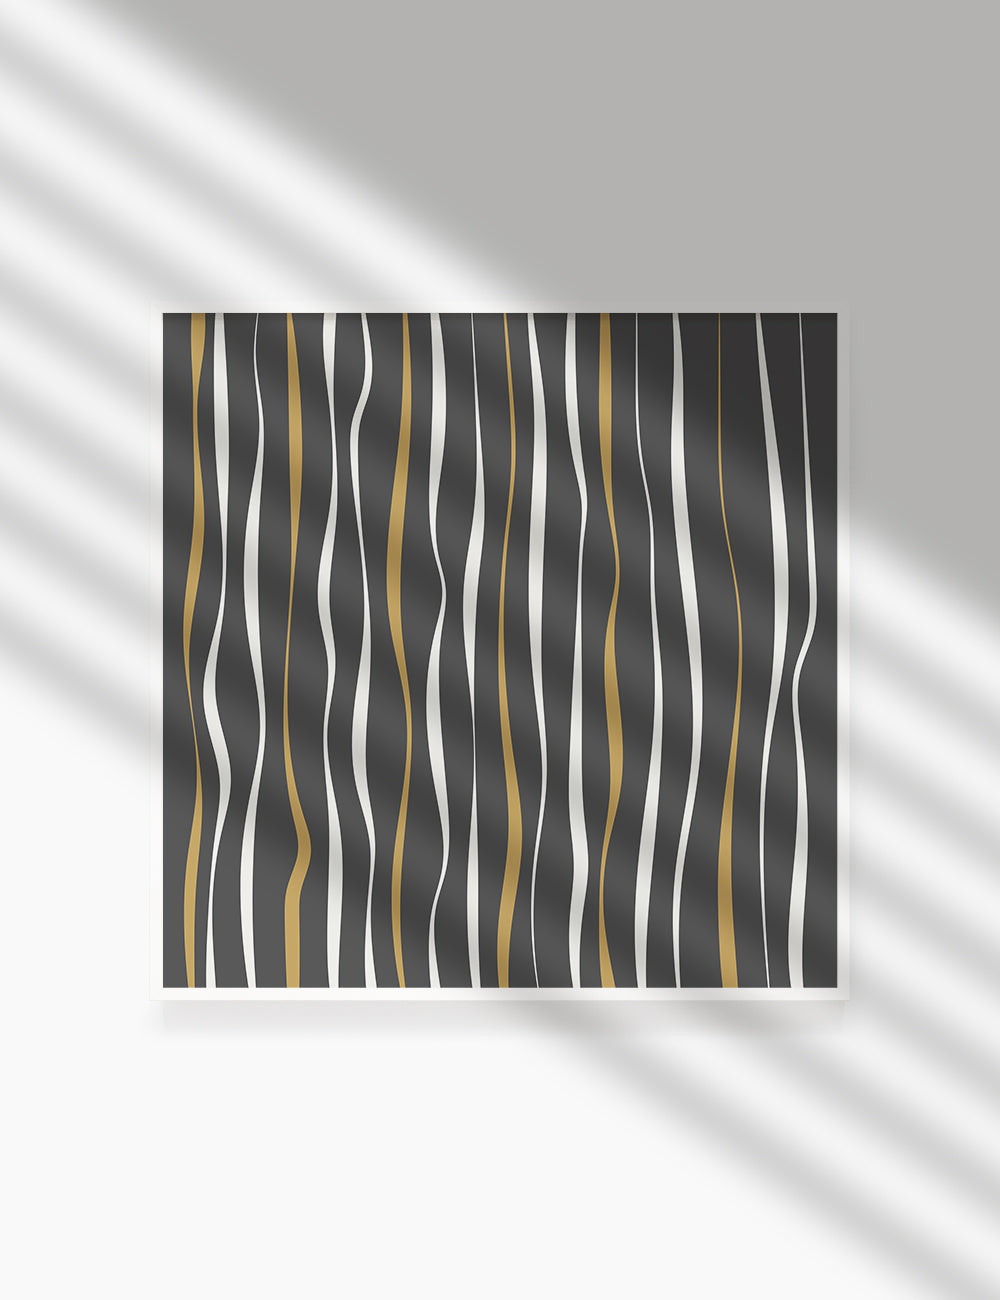 ABSTRACT MINIMAL WAVY LINES. Boho Art. Print. Printable Wall Art Illustration. Wavy lines in dark grey, dull orange, and beige. Abstract art. Minimal design. Minimalist, abstract illustration art. Printable poster. | PAPER MOON Art & Design